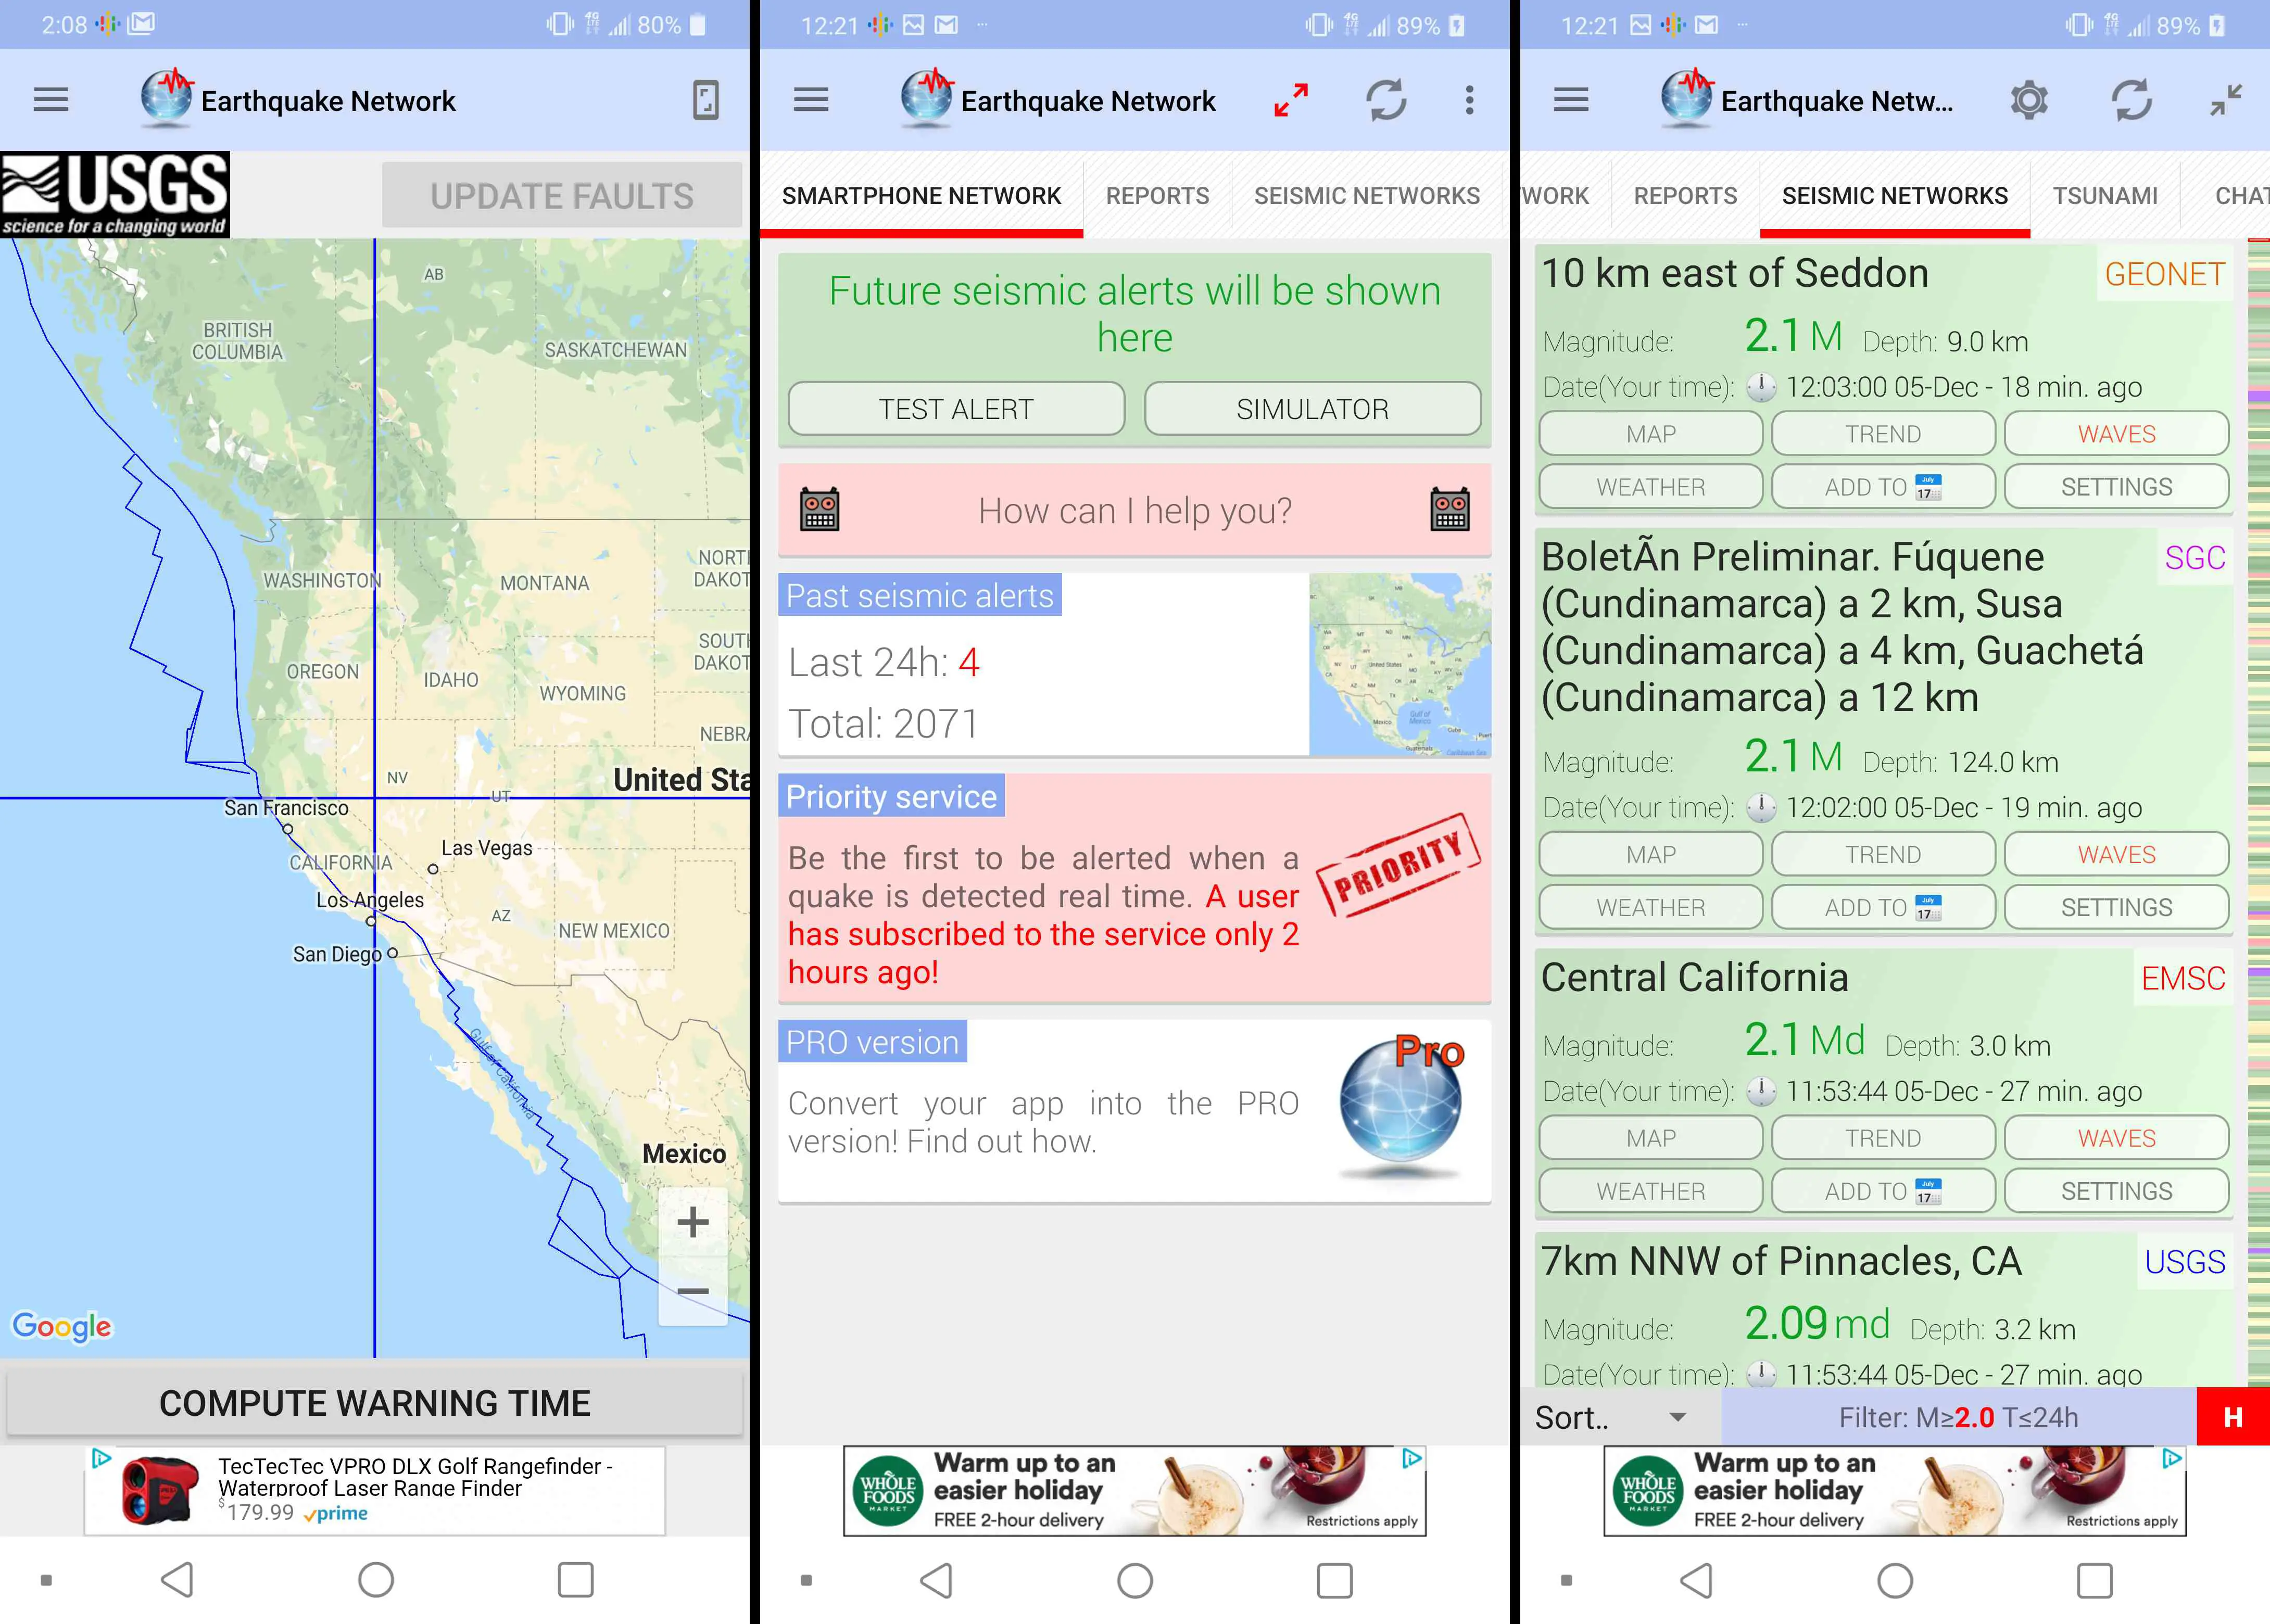 The Earthquake Network App